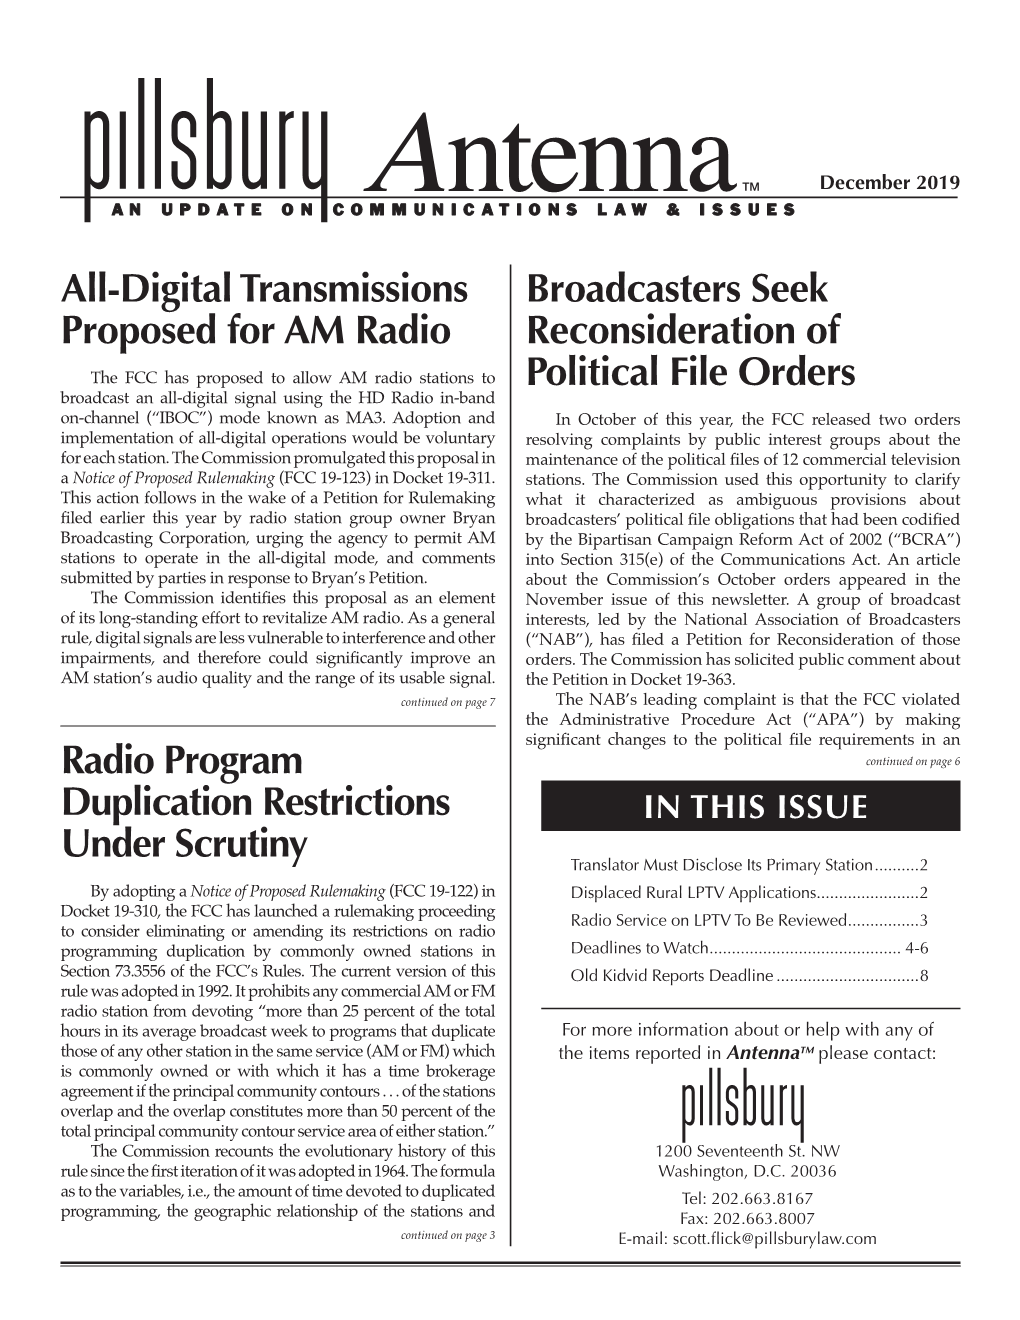 All-Digital Transmissions Proposed for AM Radio Radio Program